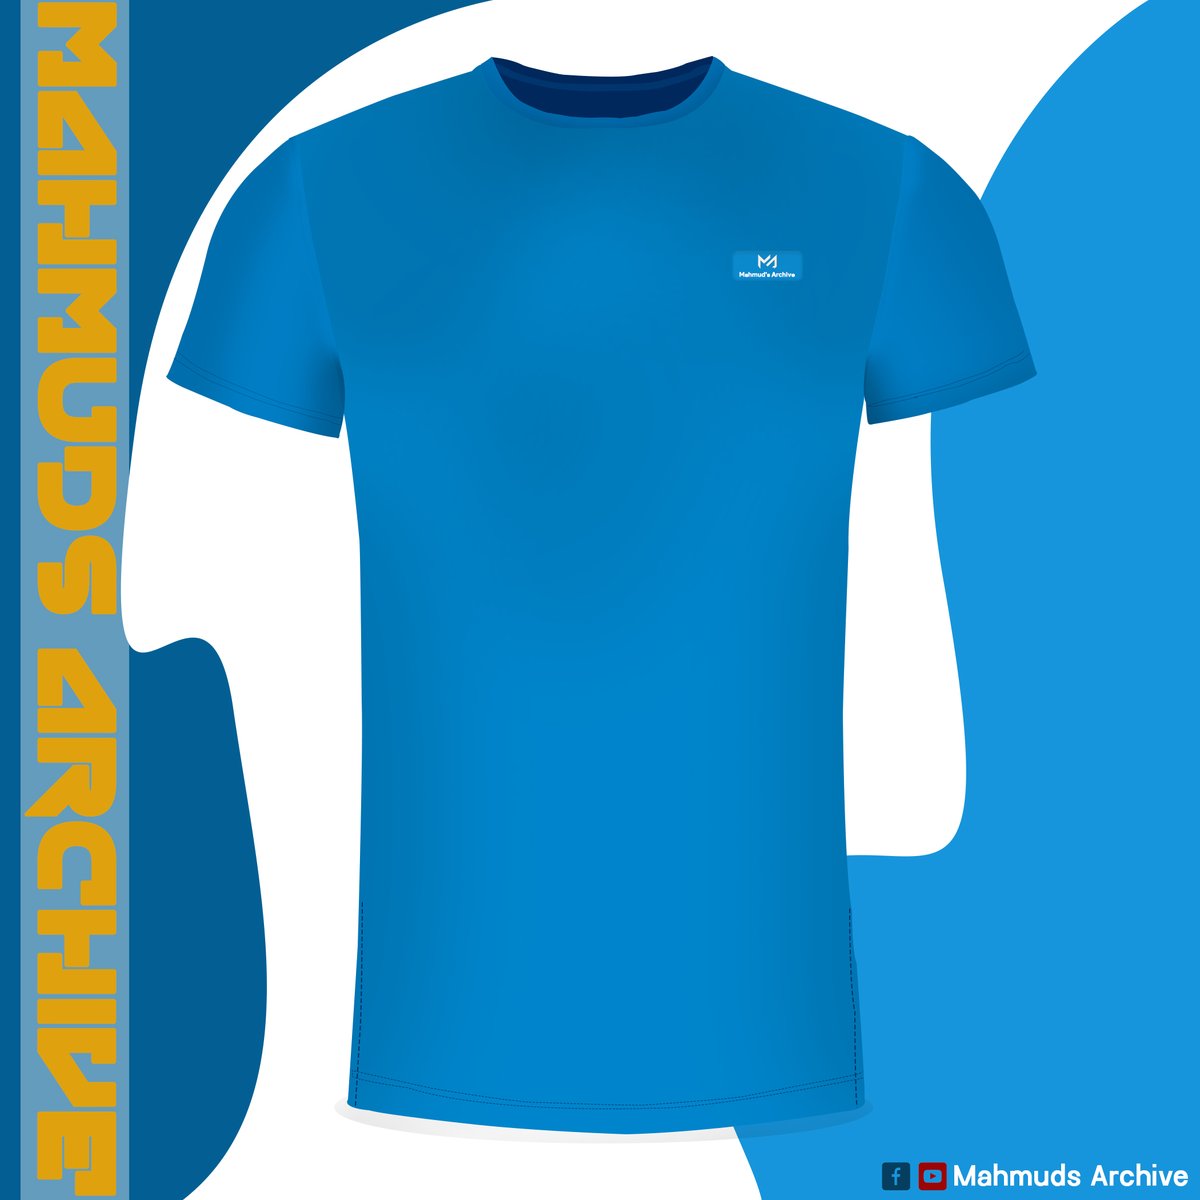 T-Shirt Mockup - Adobe photoshop
Link : bit.ly/3oaoac3

#mockup #PhotoshopMockup #TshirtMockup
#mahmudsarchive